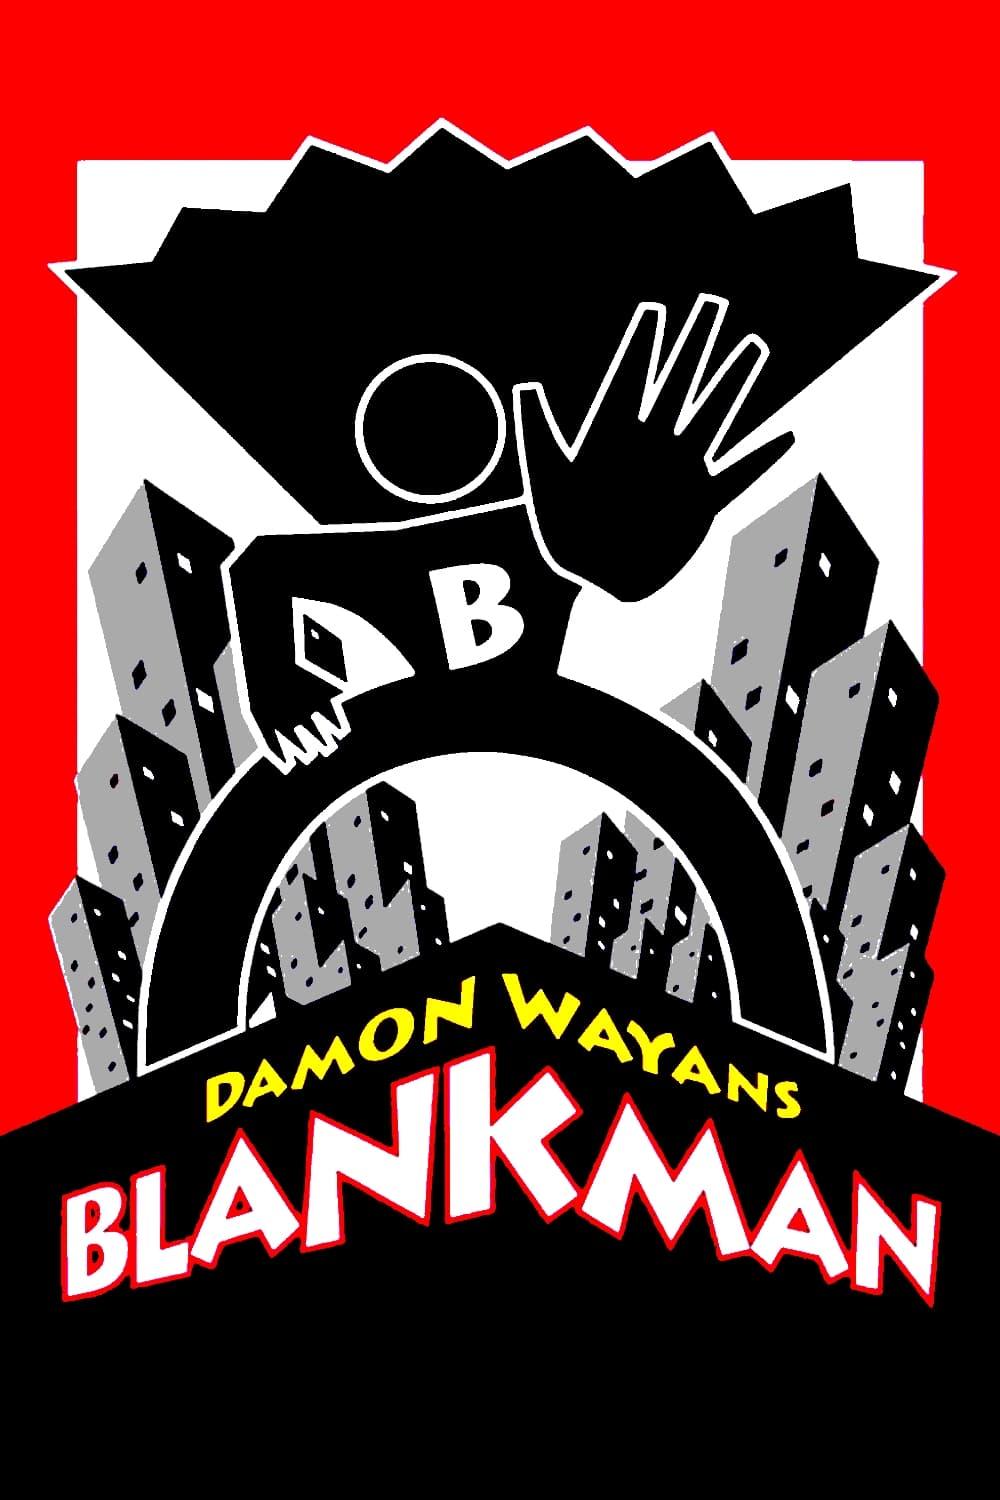 Blankman poster